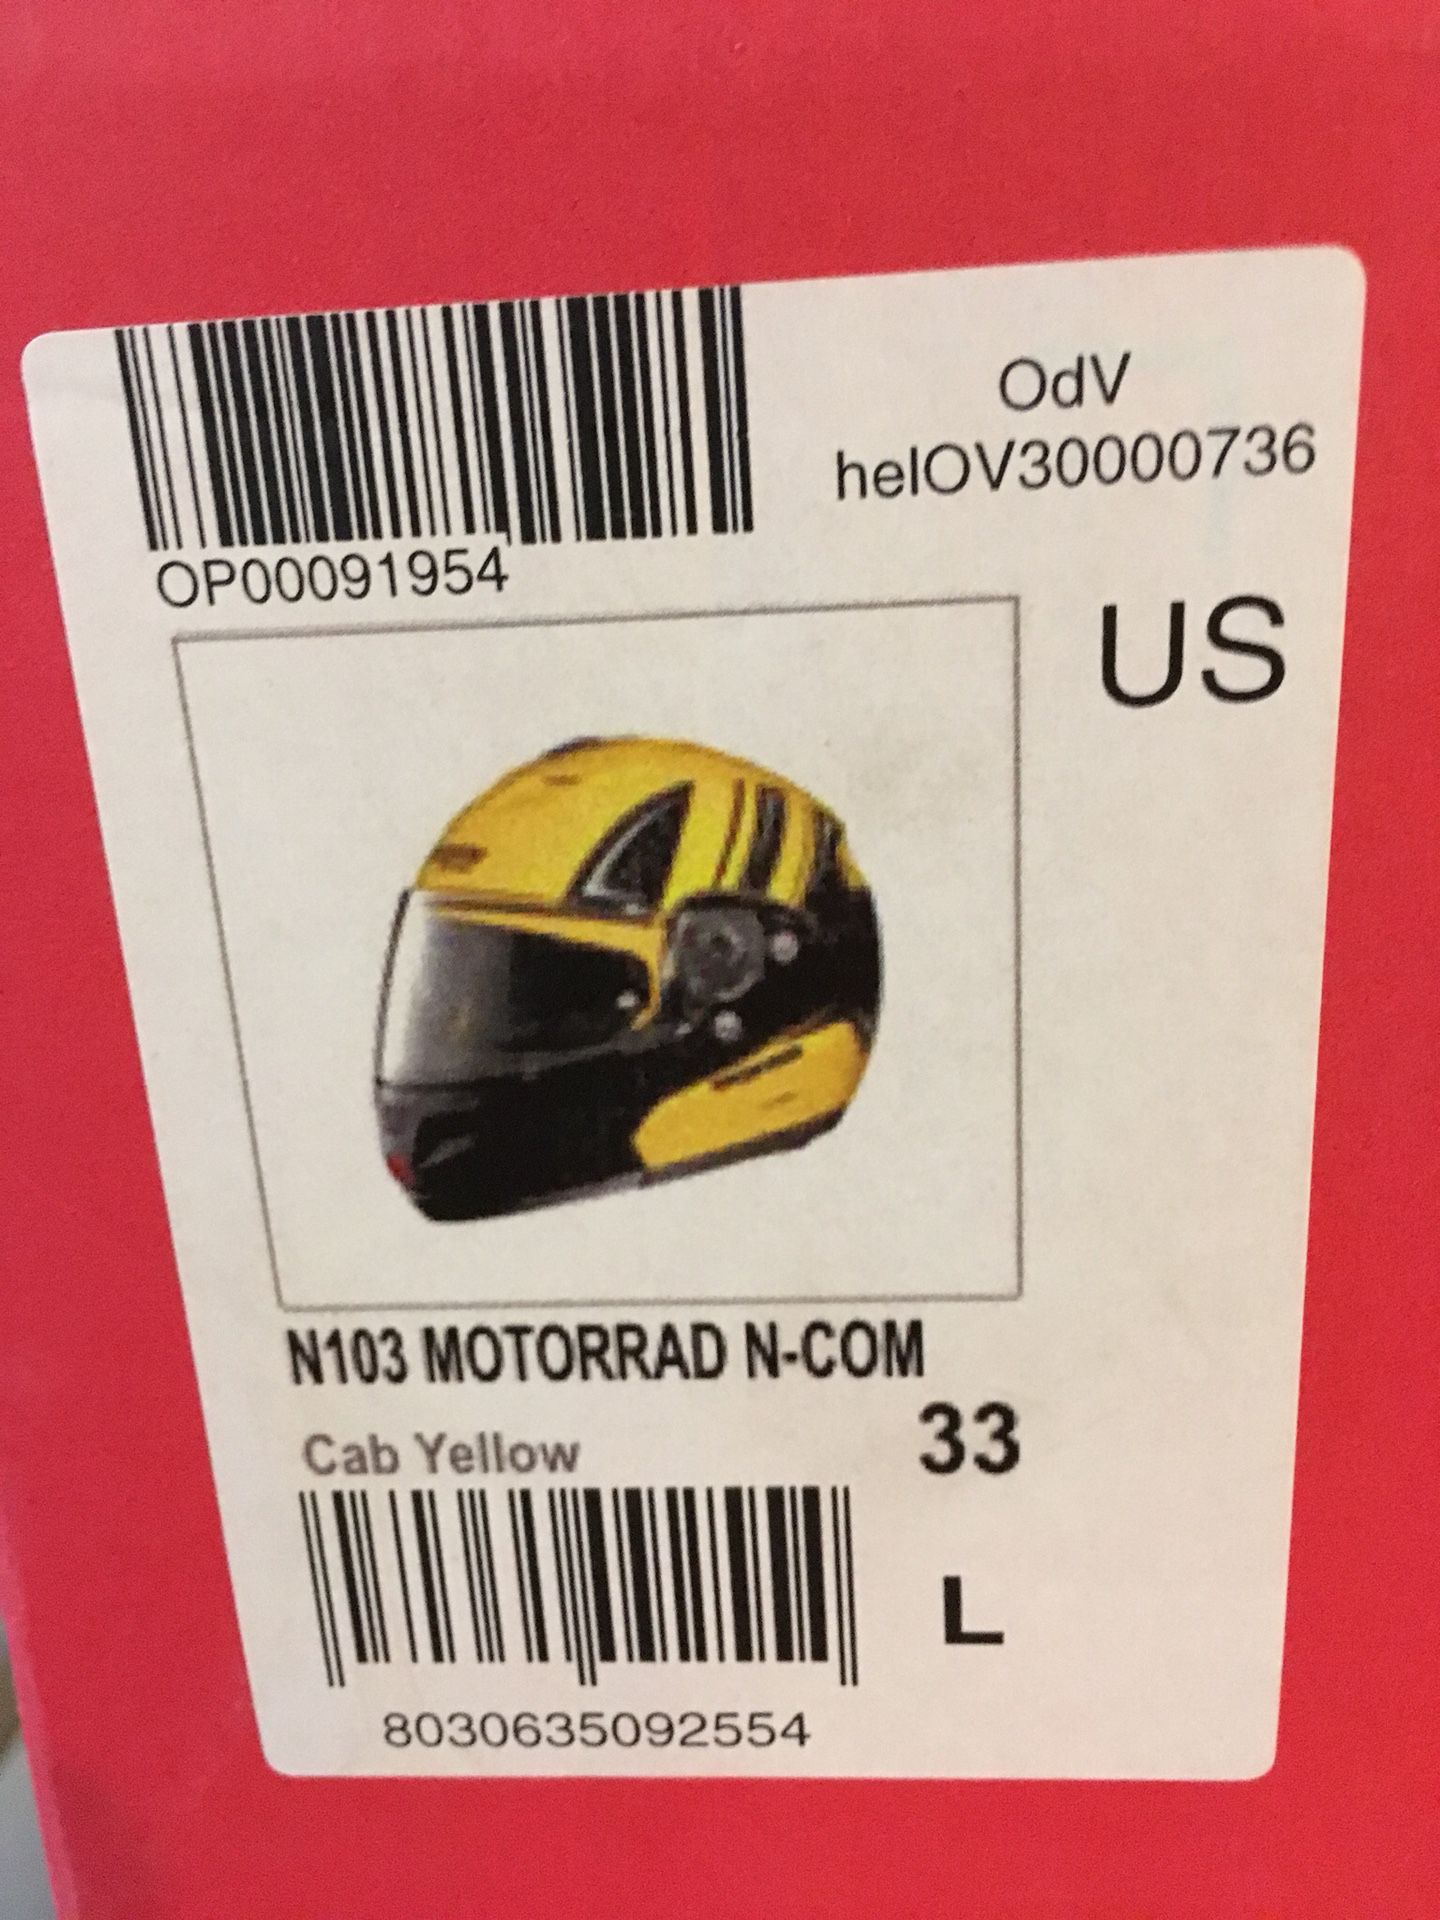 Nolan modular motorrad helmet (motorcycle), chatterbox intercom equipped